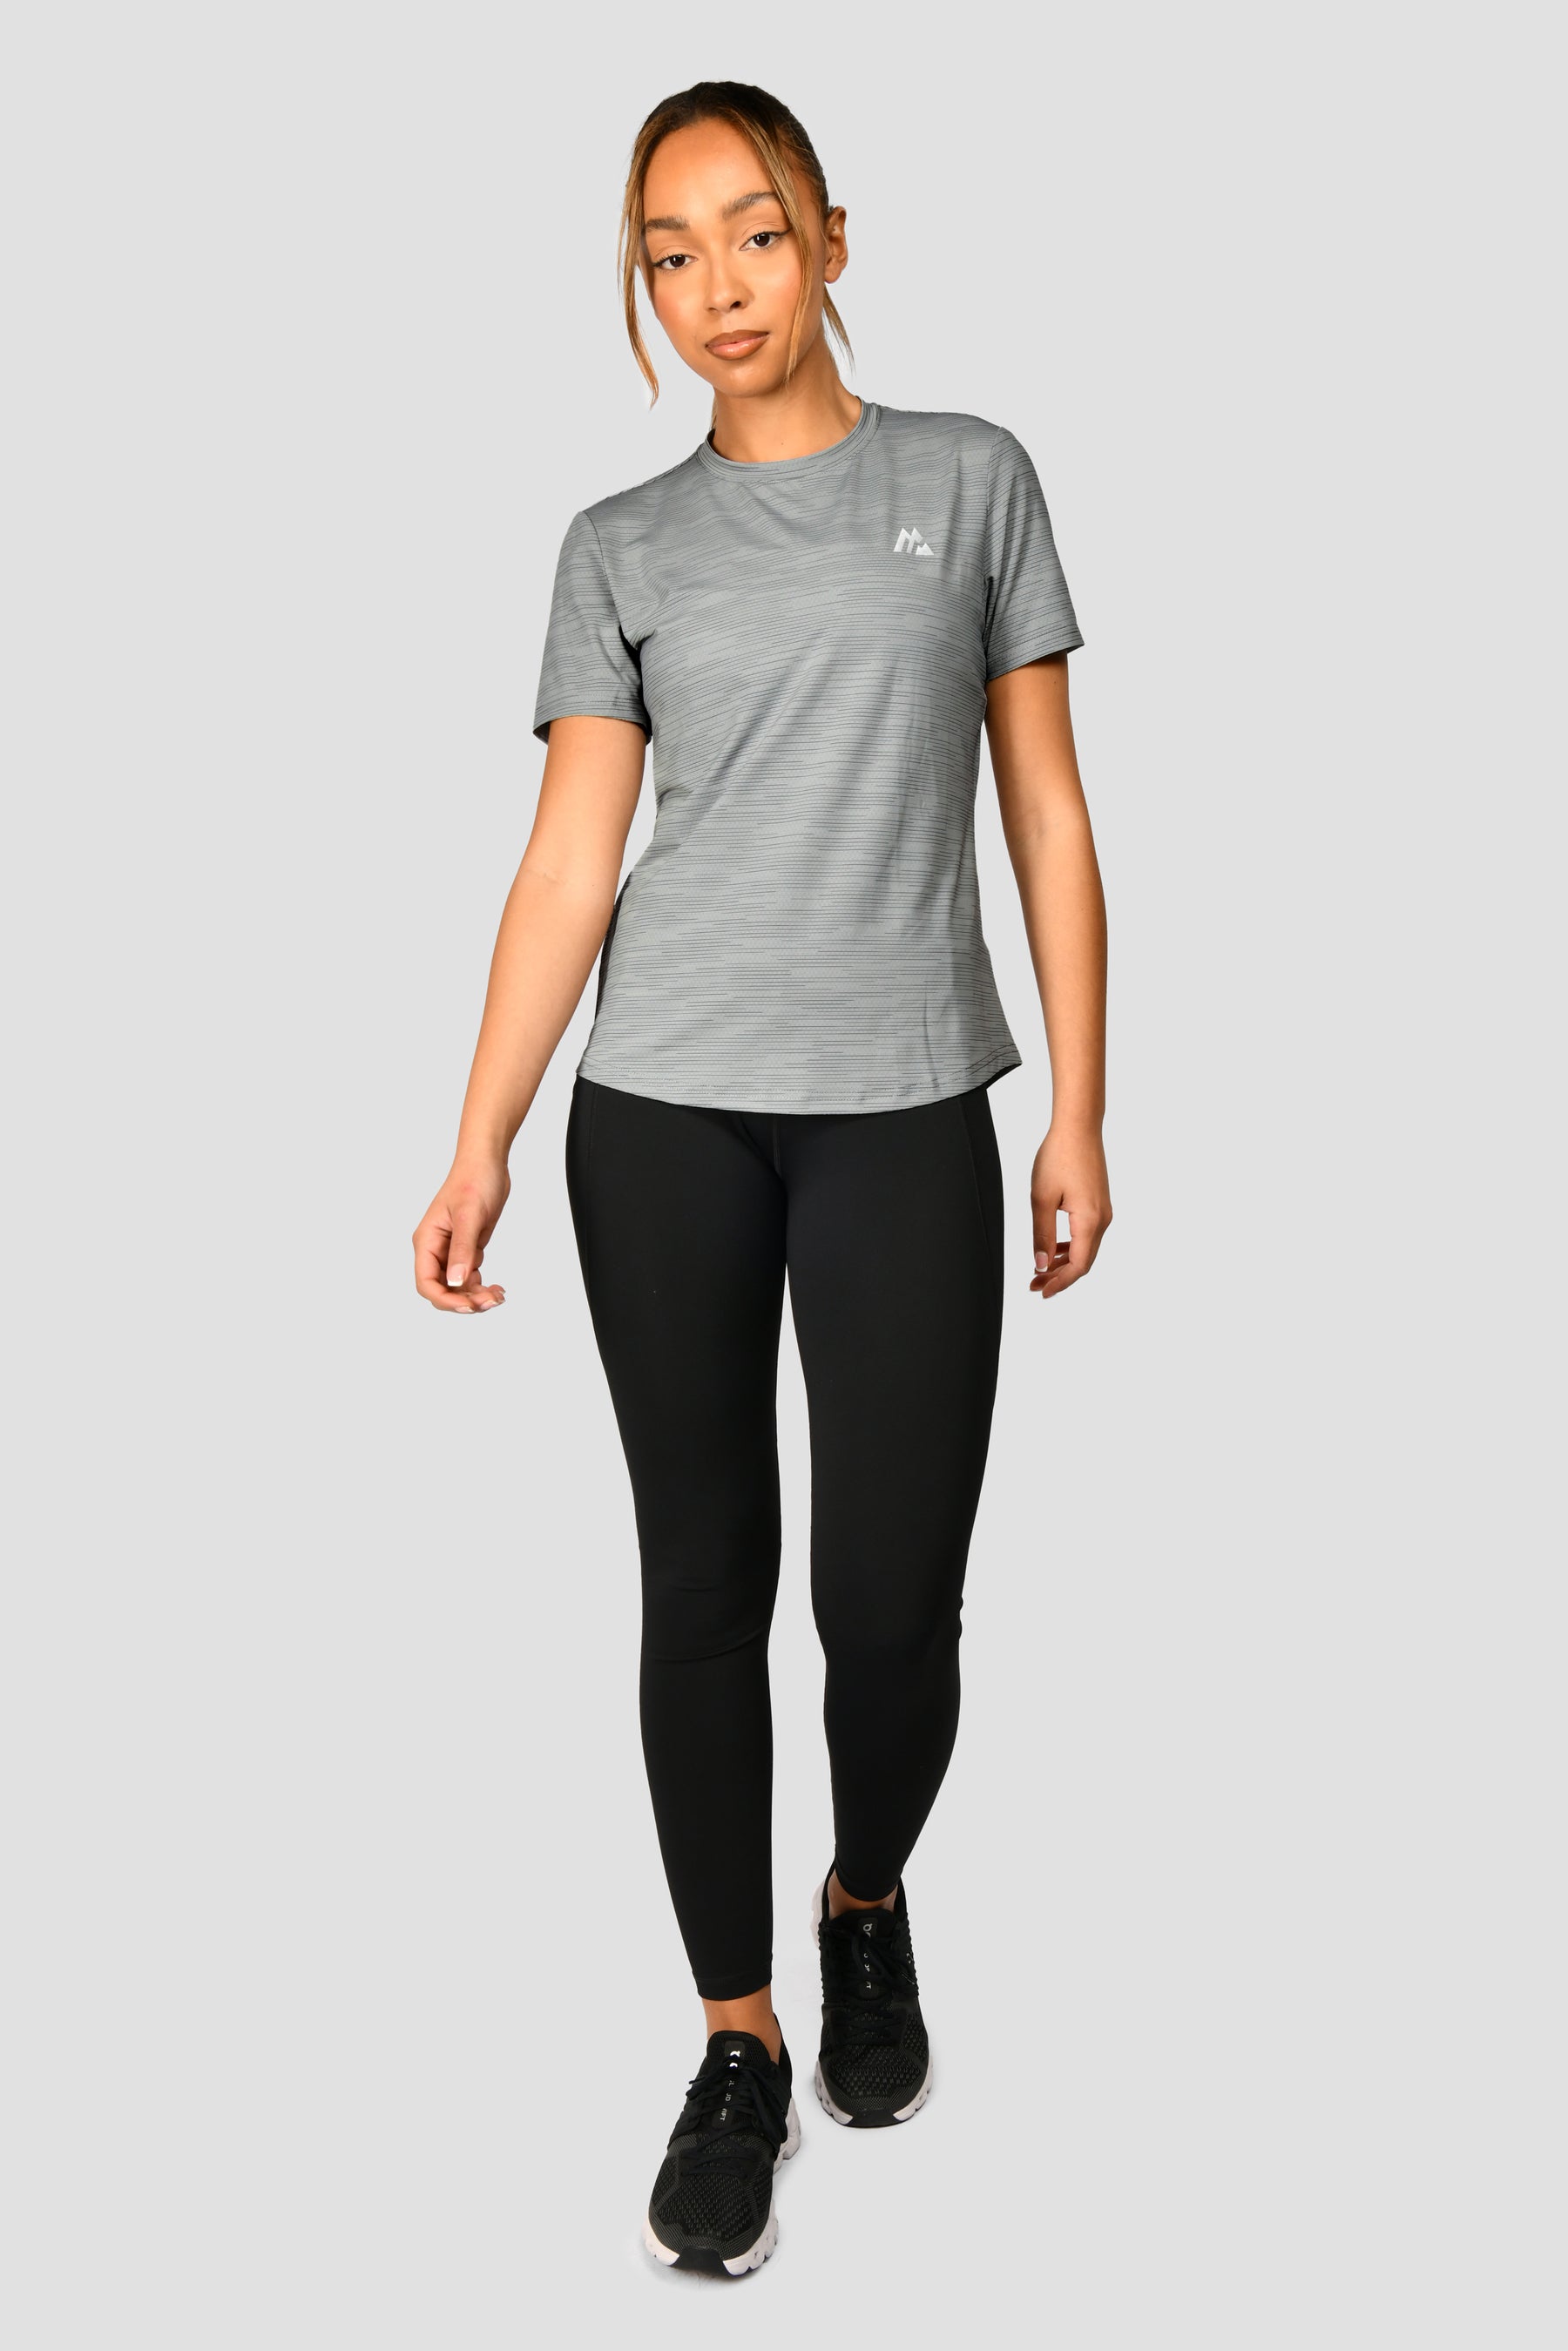 Women's Fly 2.0 T-Shirt - Cadet Grey/White